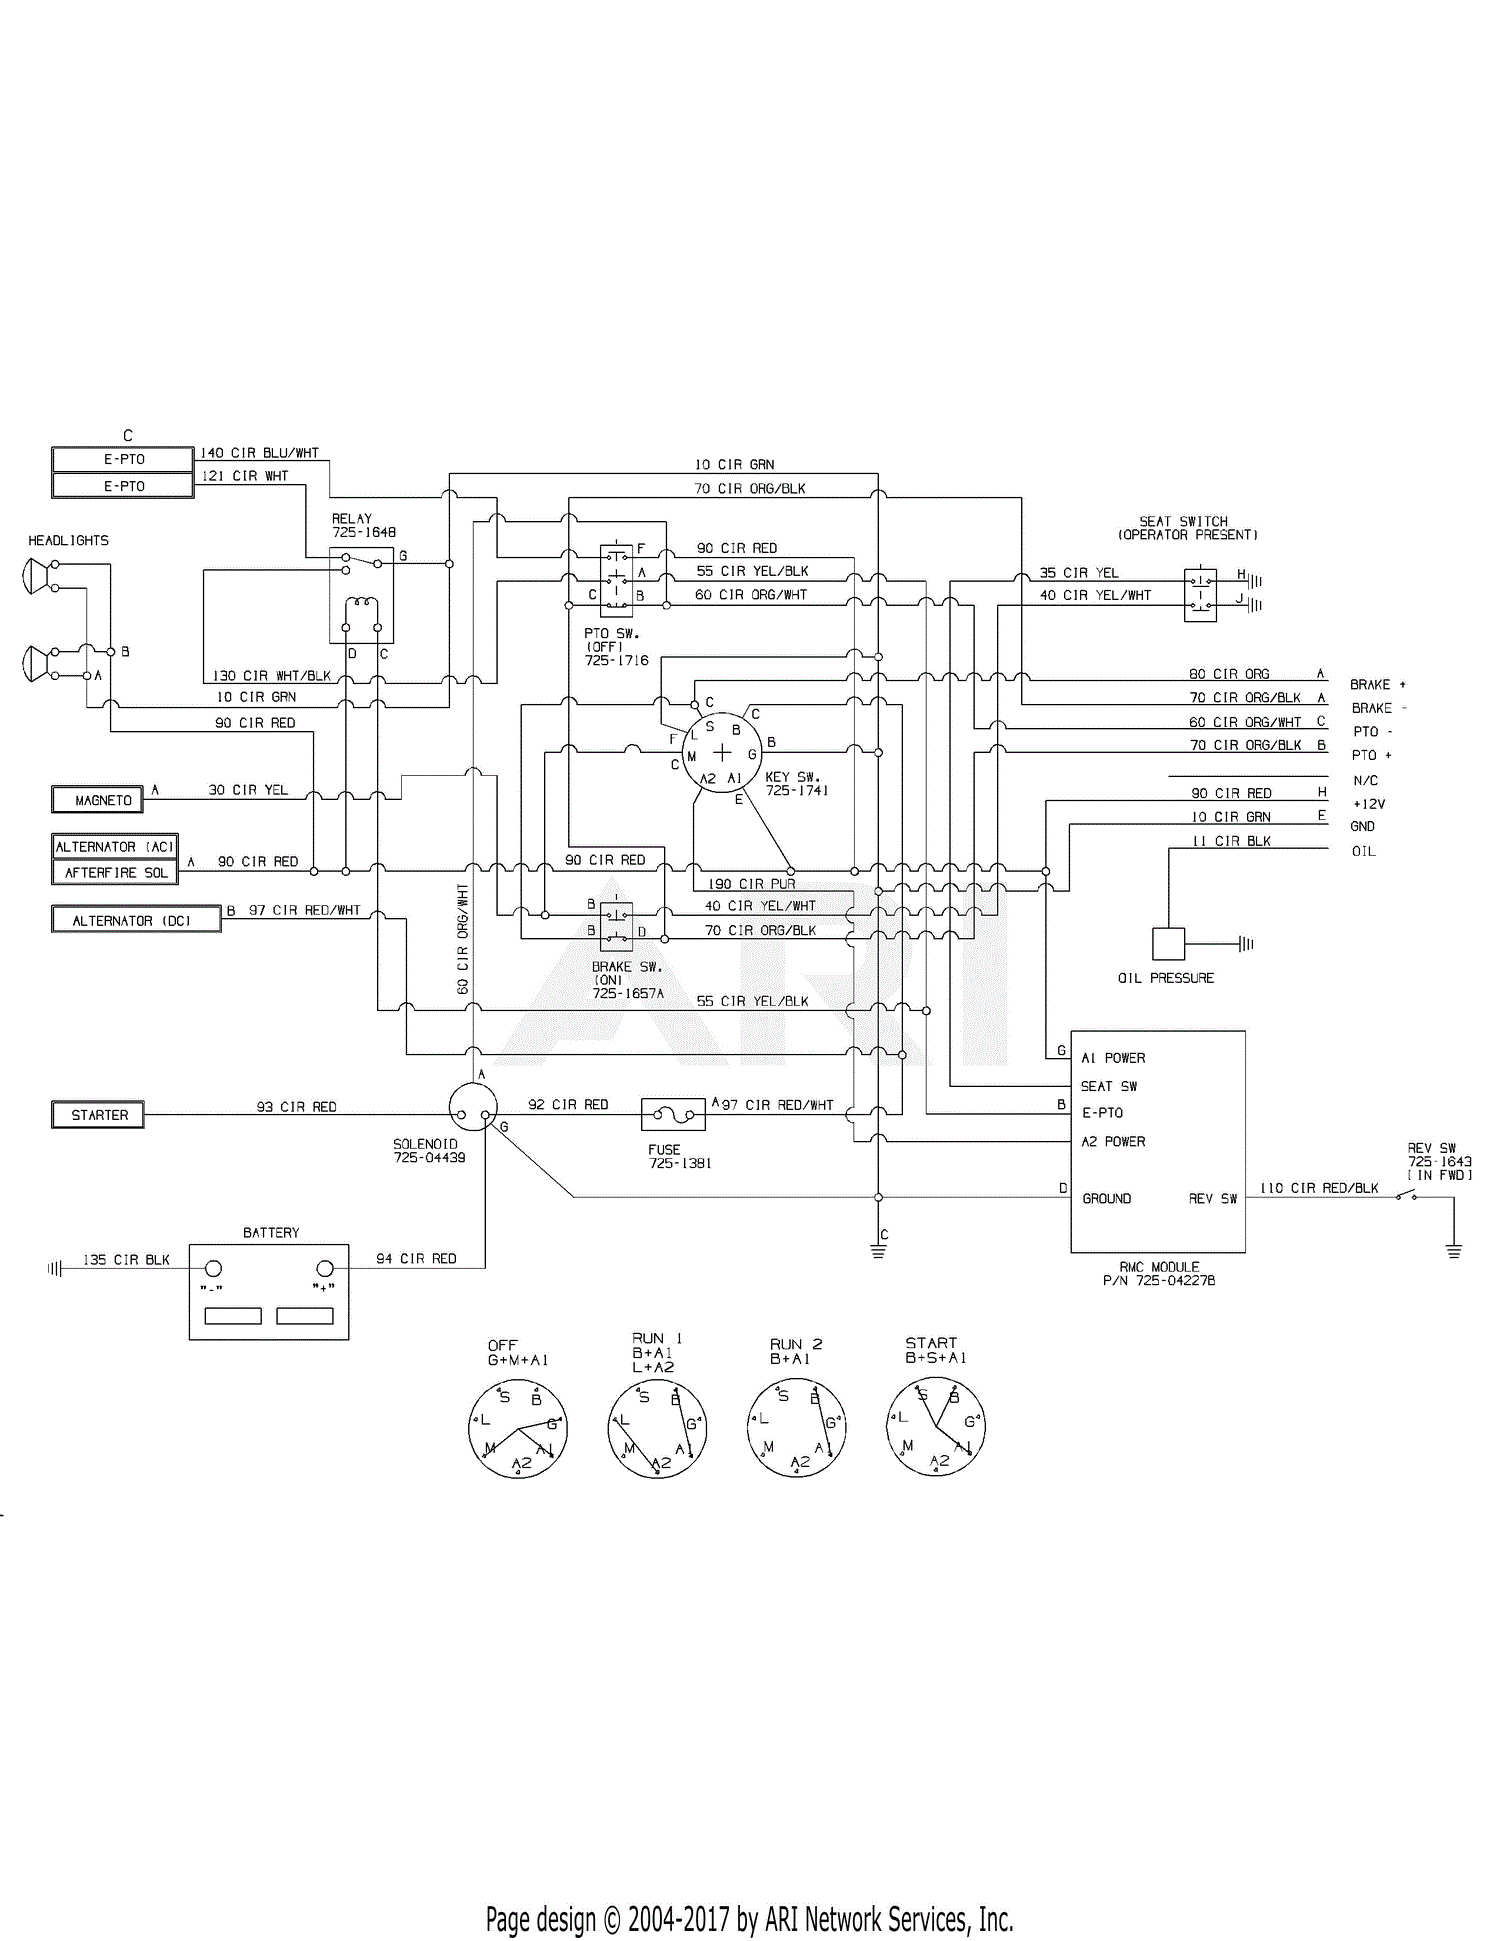 Diagram 138 014 Mtd Wiring Diagram Full Version Hd Quality Wiring Diagram Seemdiagram Eracleaturismo It